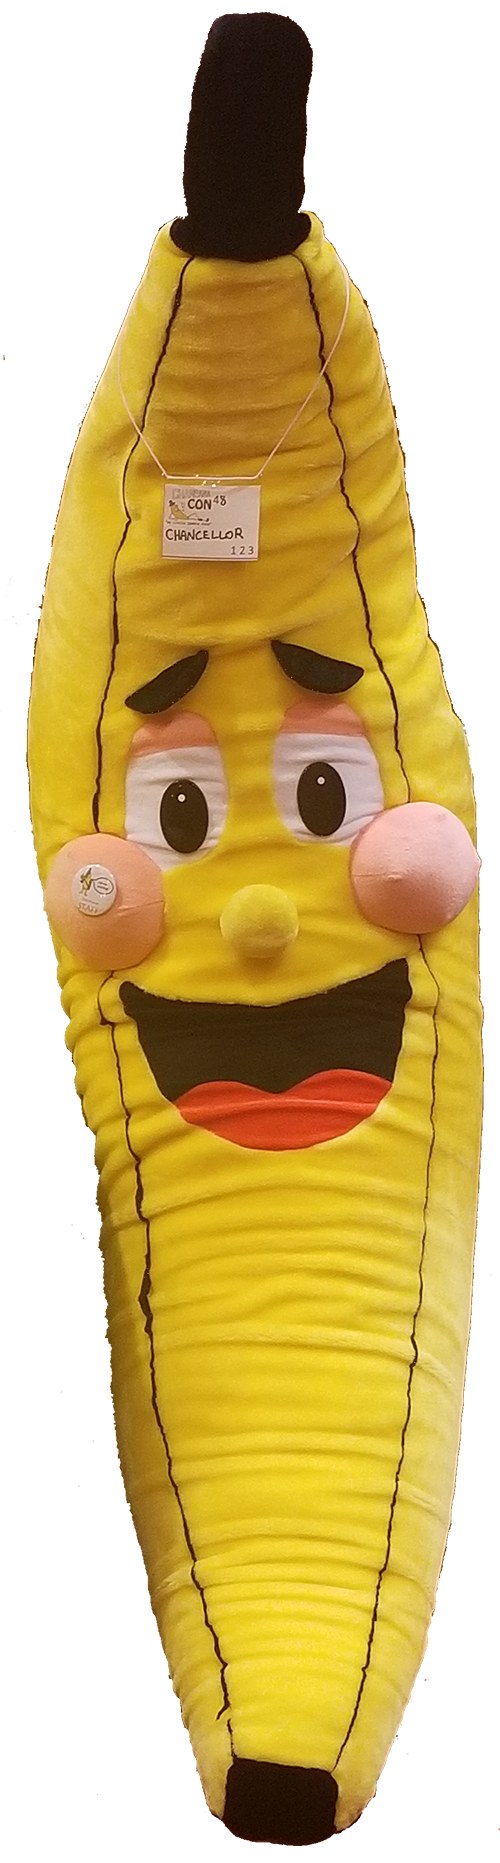 Chancellor, the Big Banana